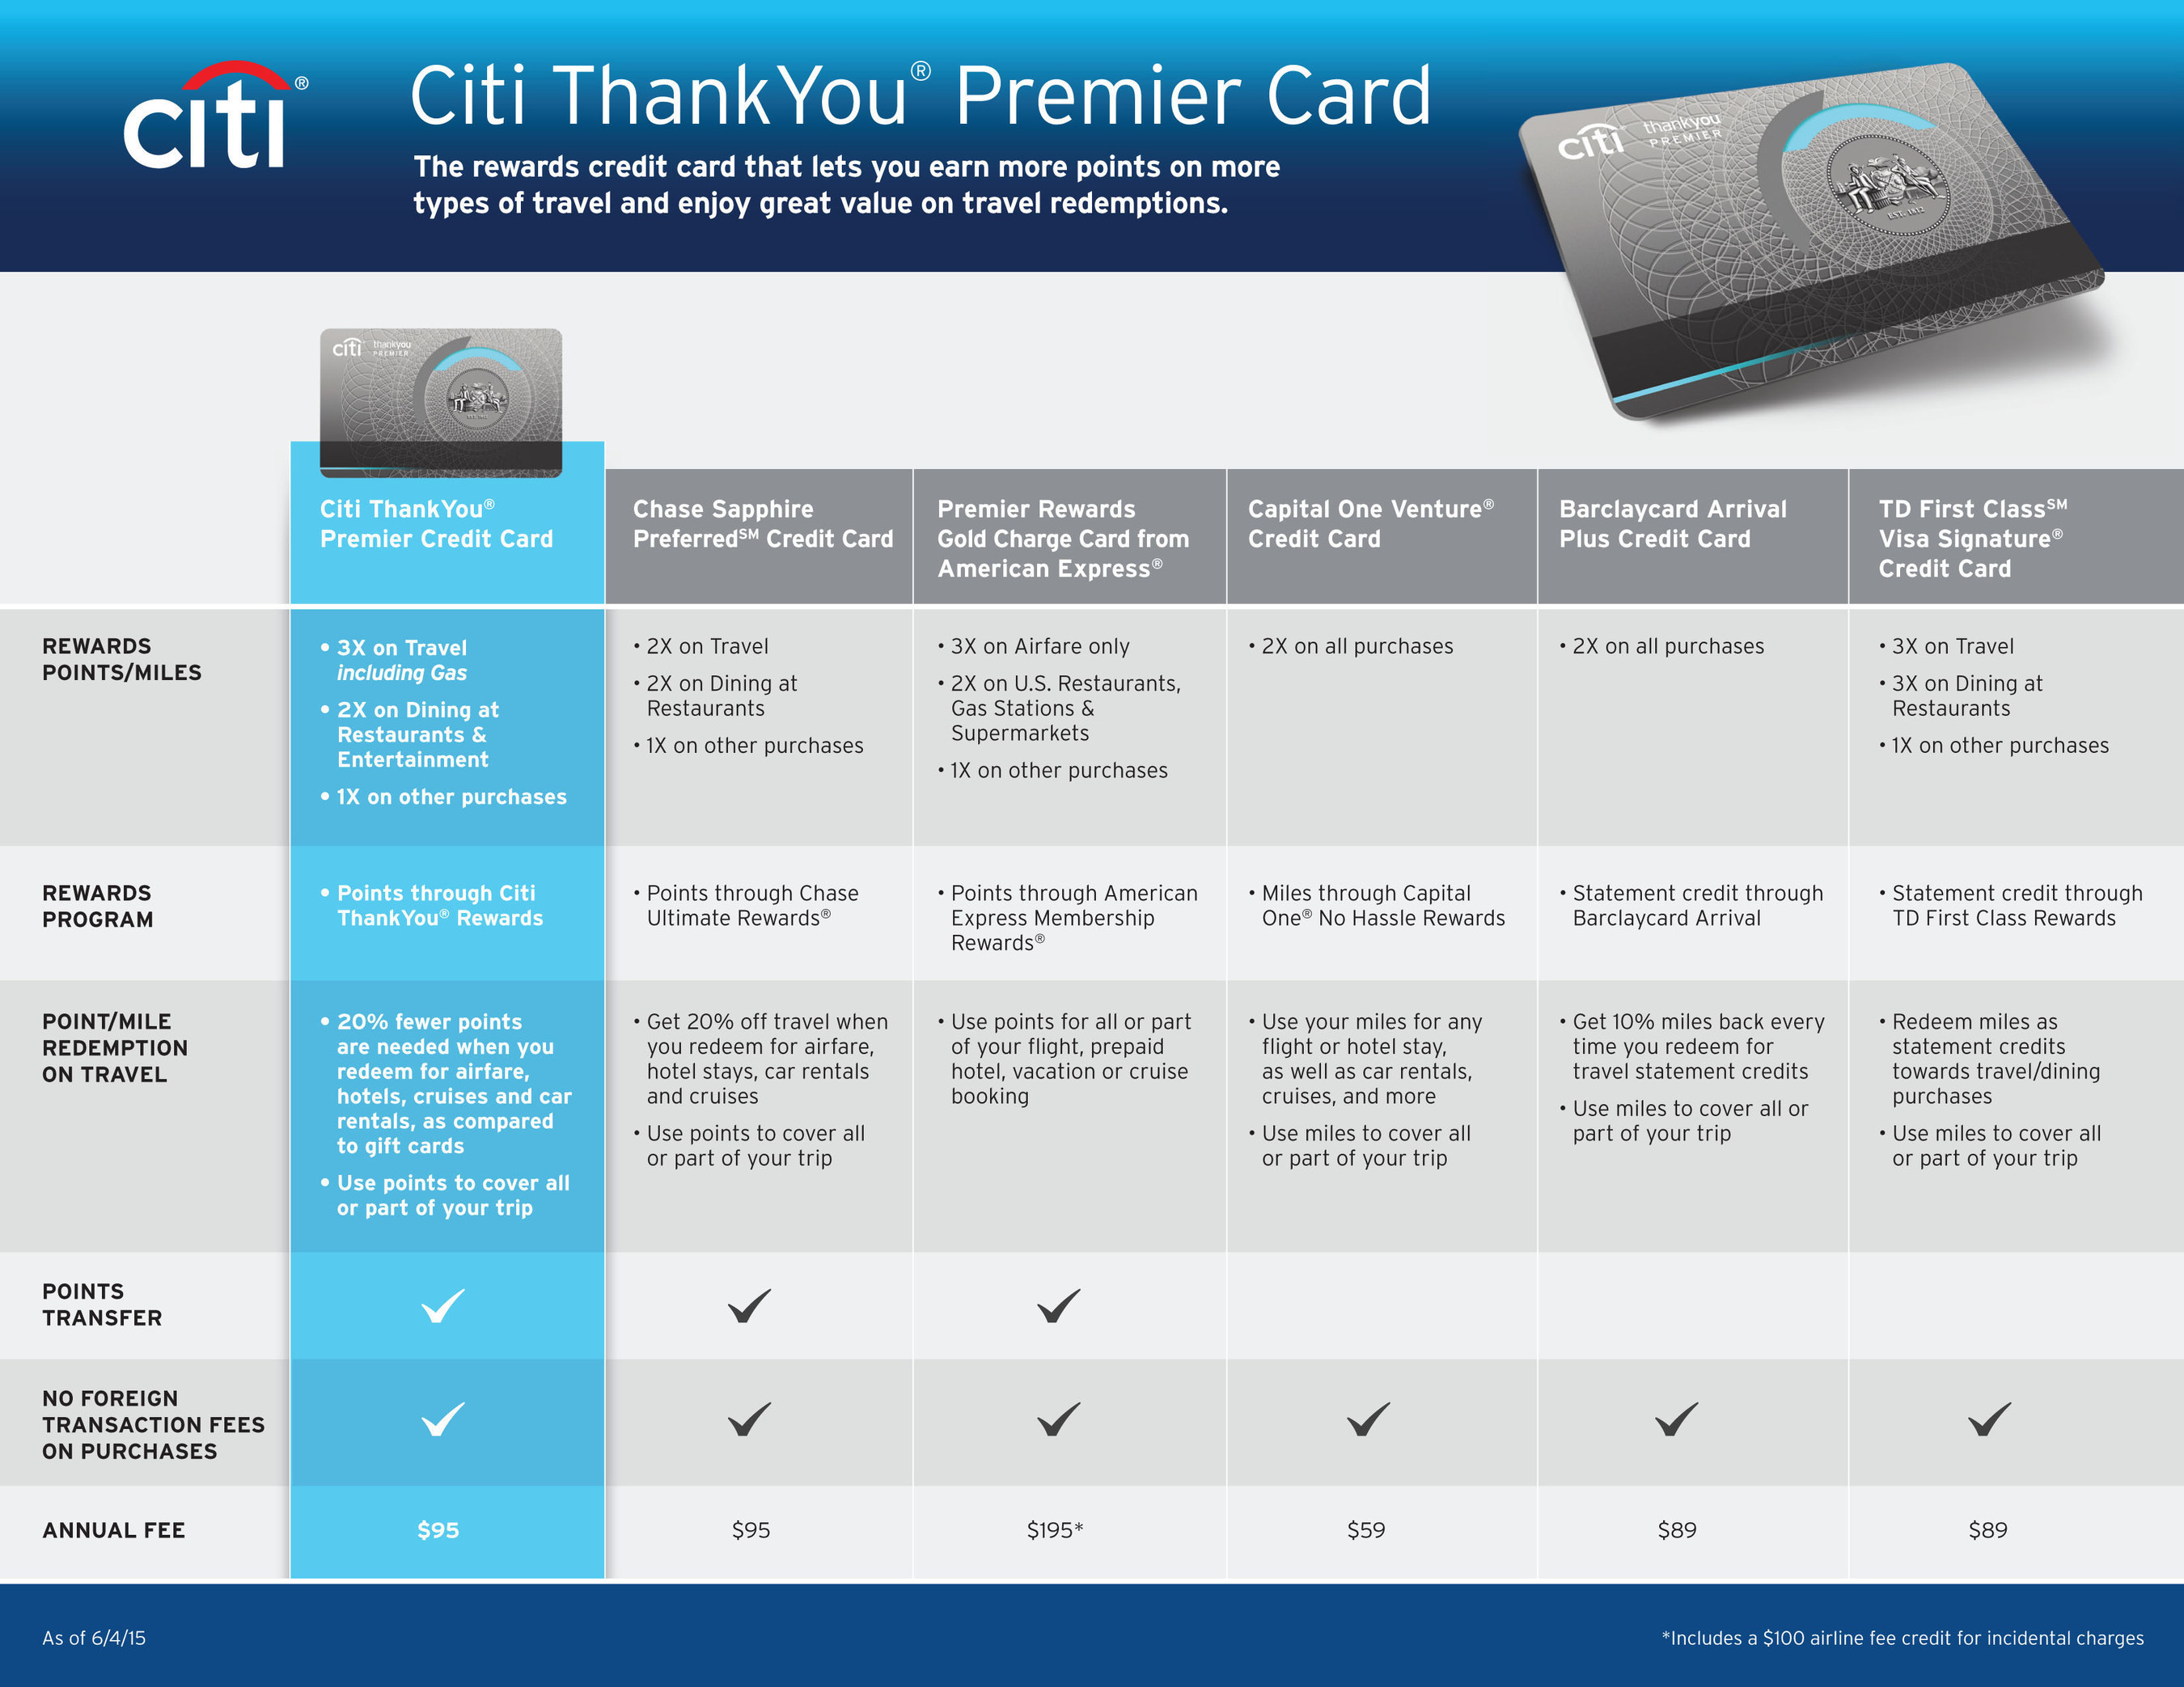 Citi ThankYou Premier Card comparison chart